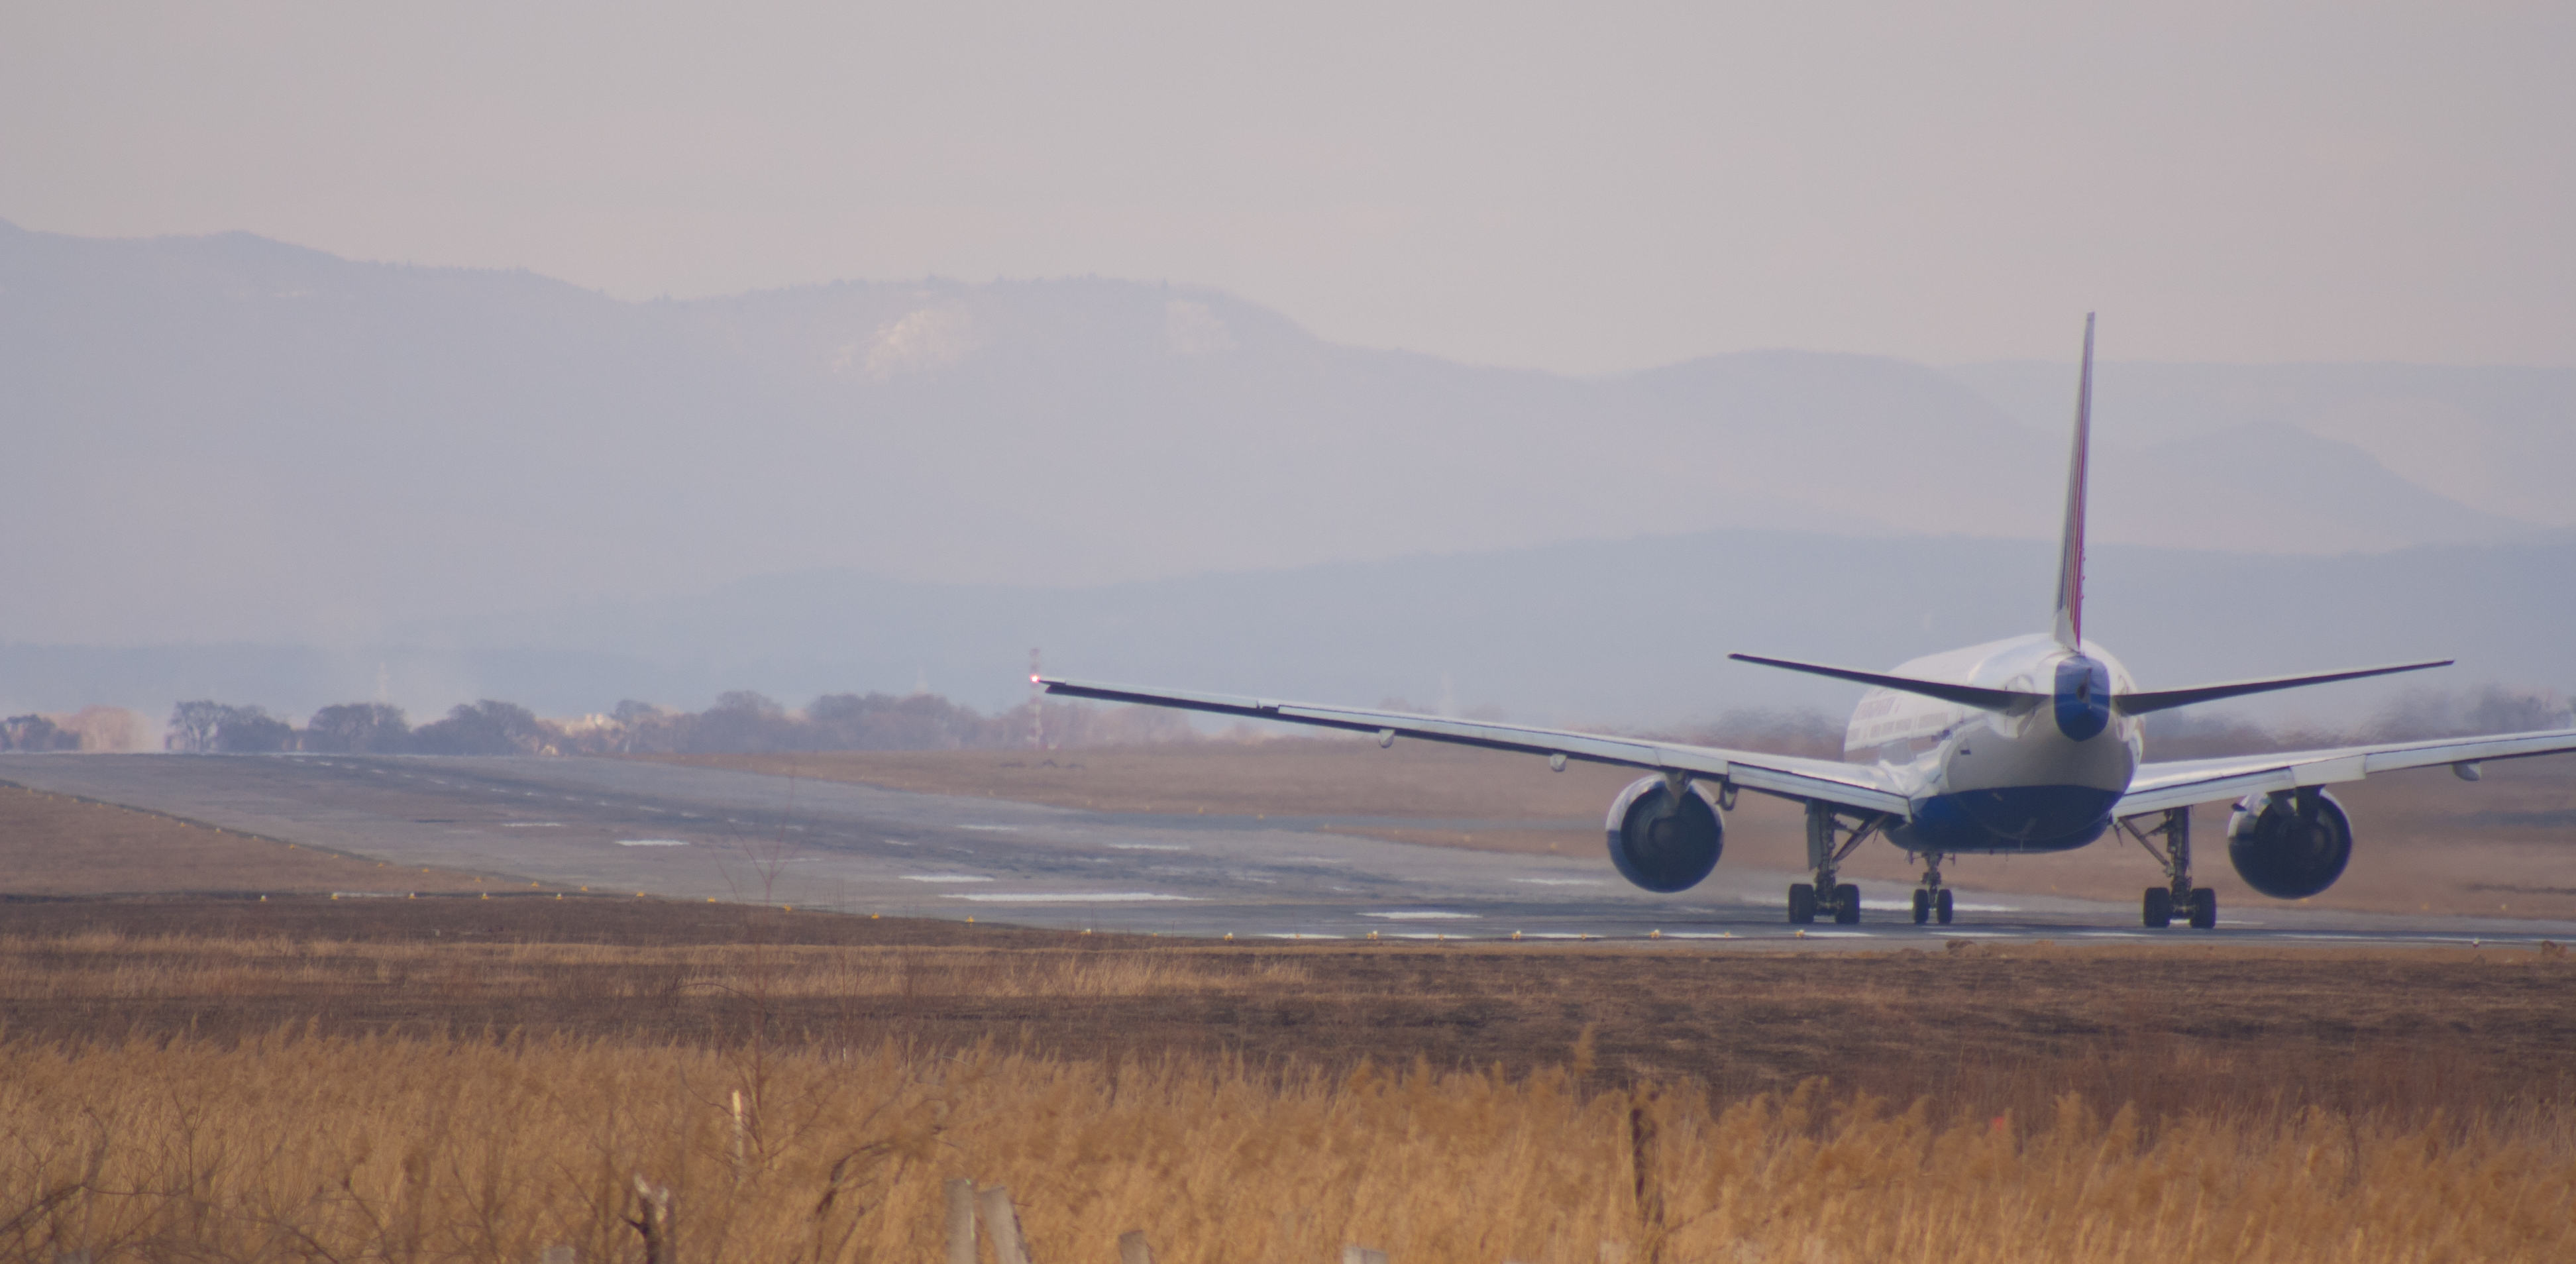 File:Boeing 777-200 ready for takeoff (5566909954).jpg - Wikimedia ...